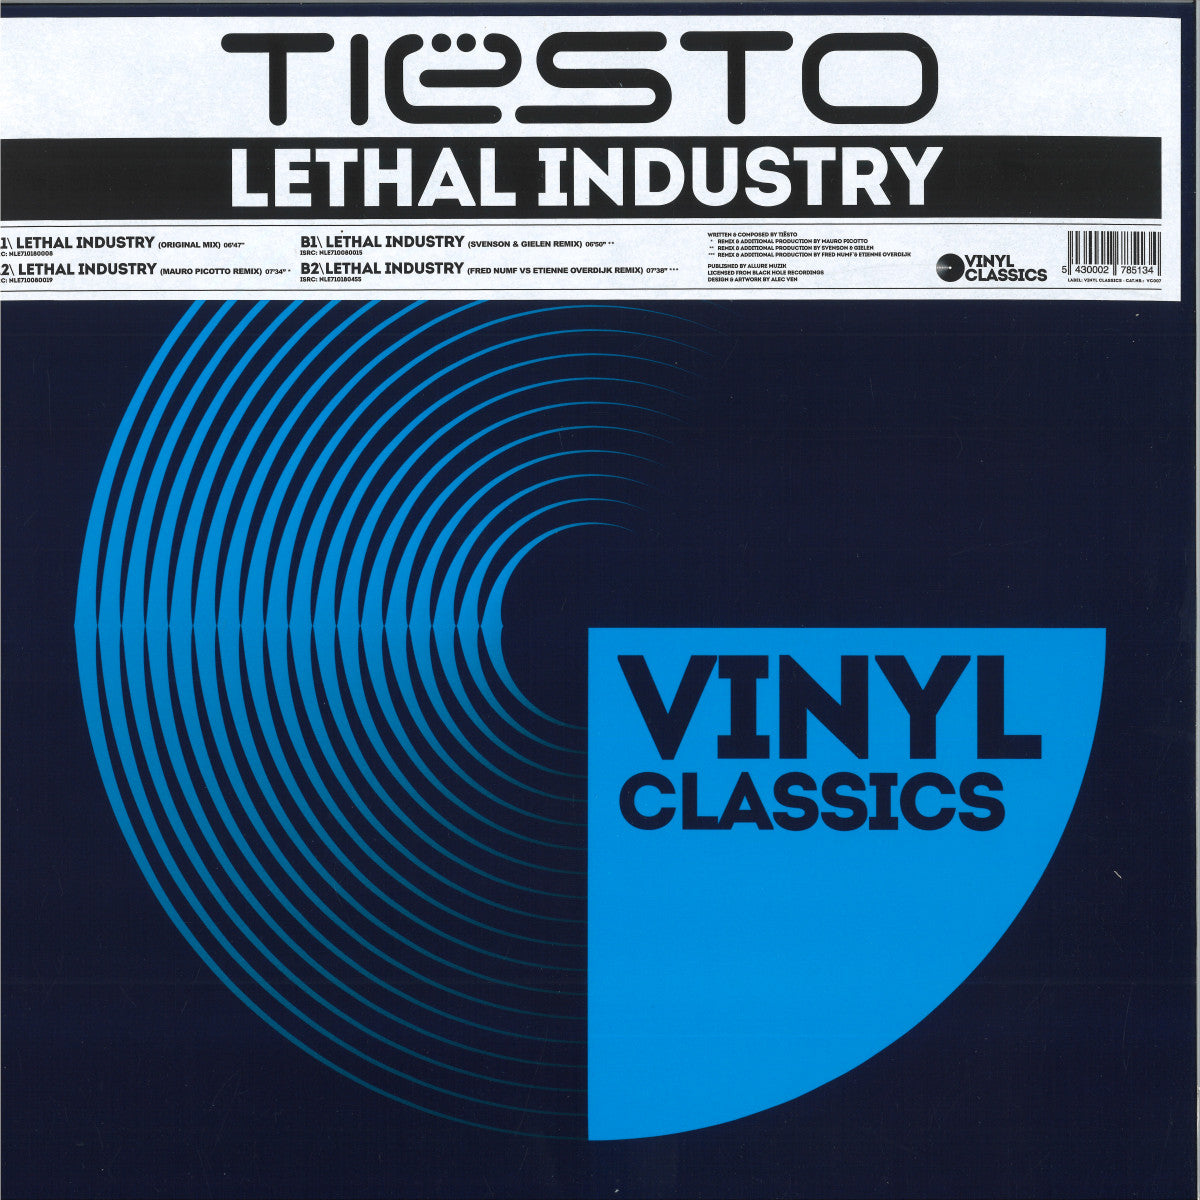 Tiesto - Lethal Industry [Vinyl Classics]